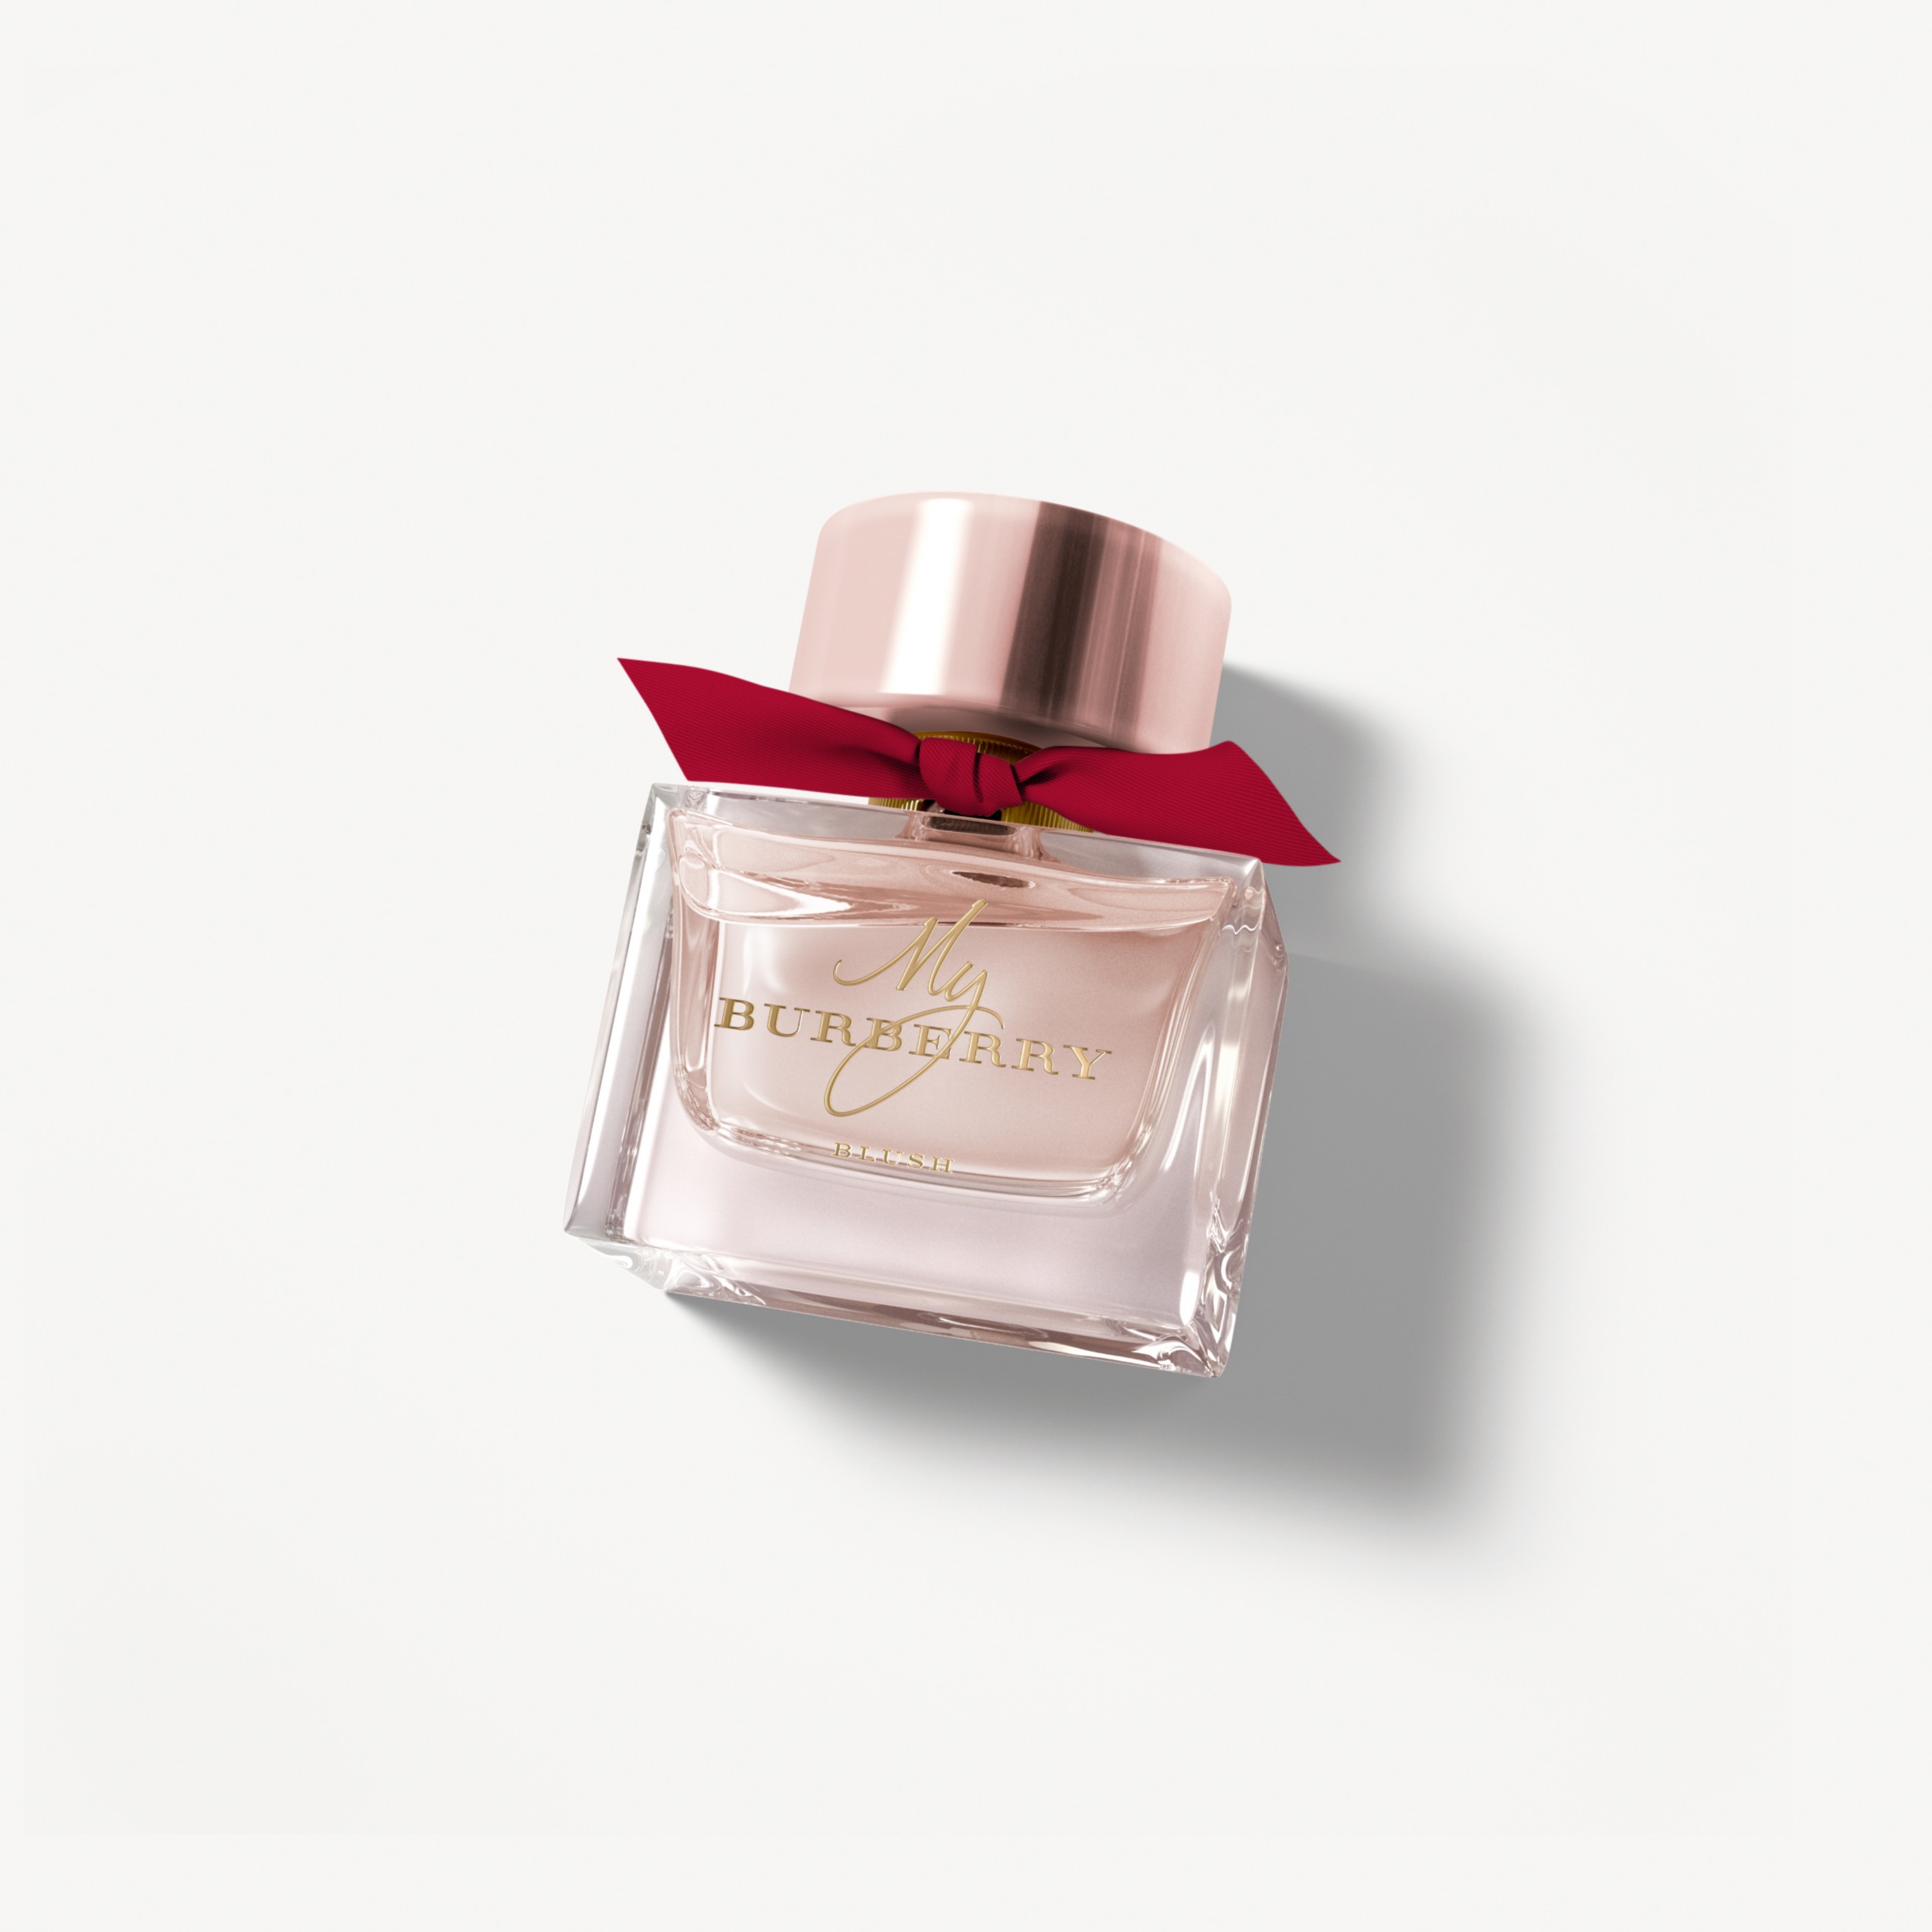 My Burberry Blush Eau de Parfum 90ml - | Burberry® Official